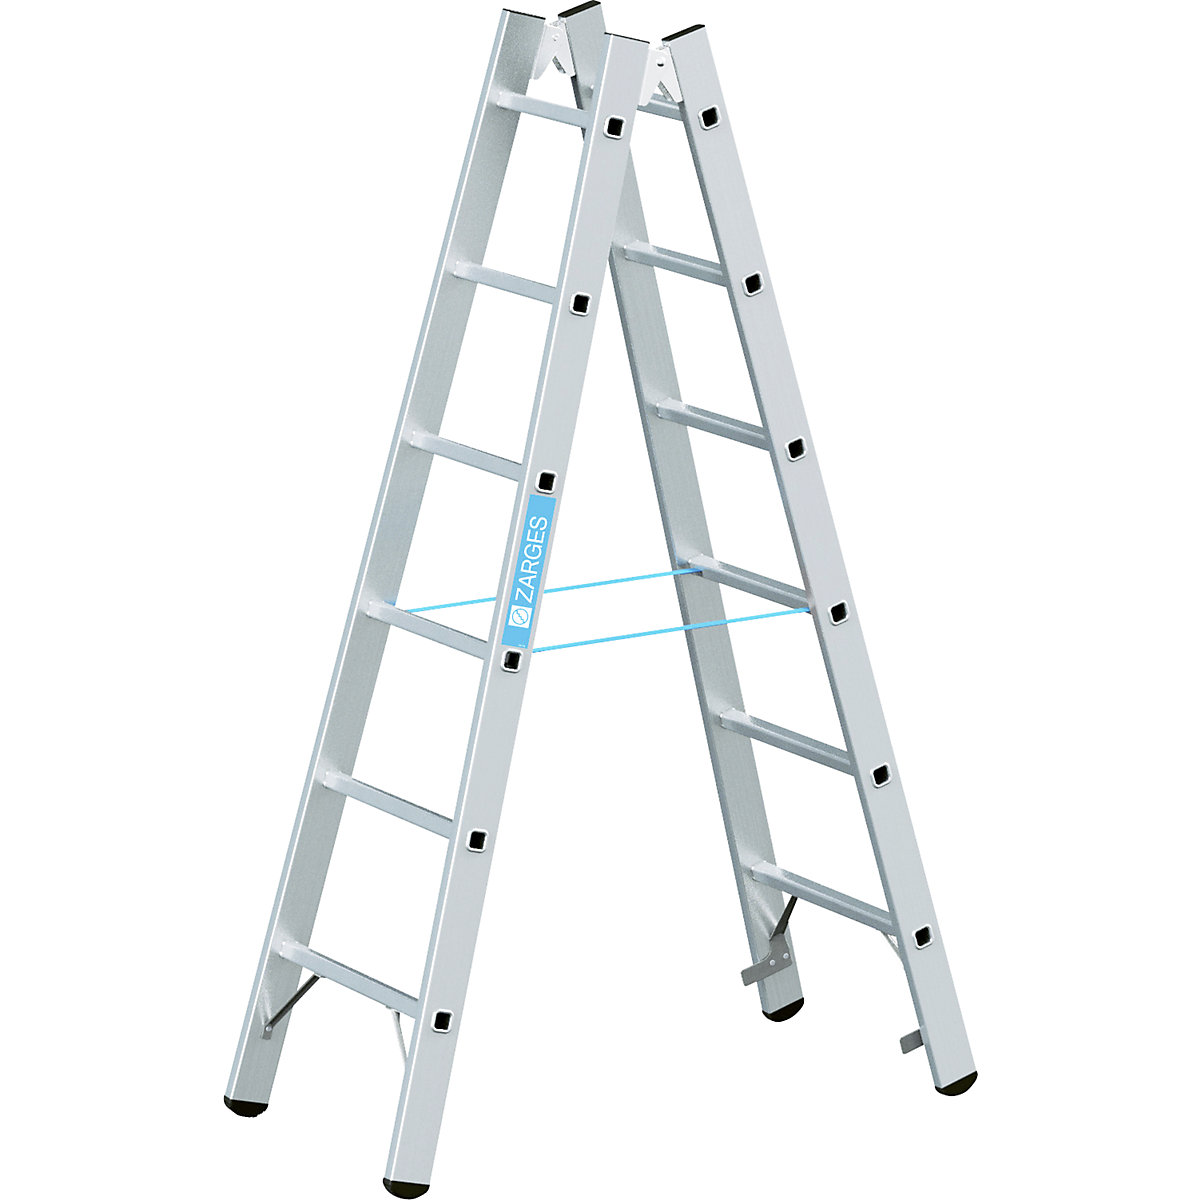 Professional rung ladder - ZARGES